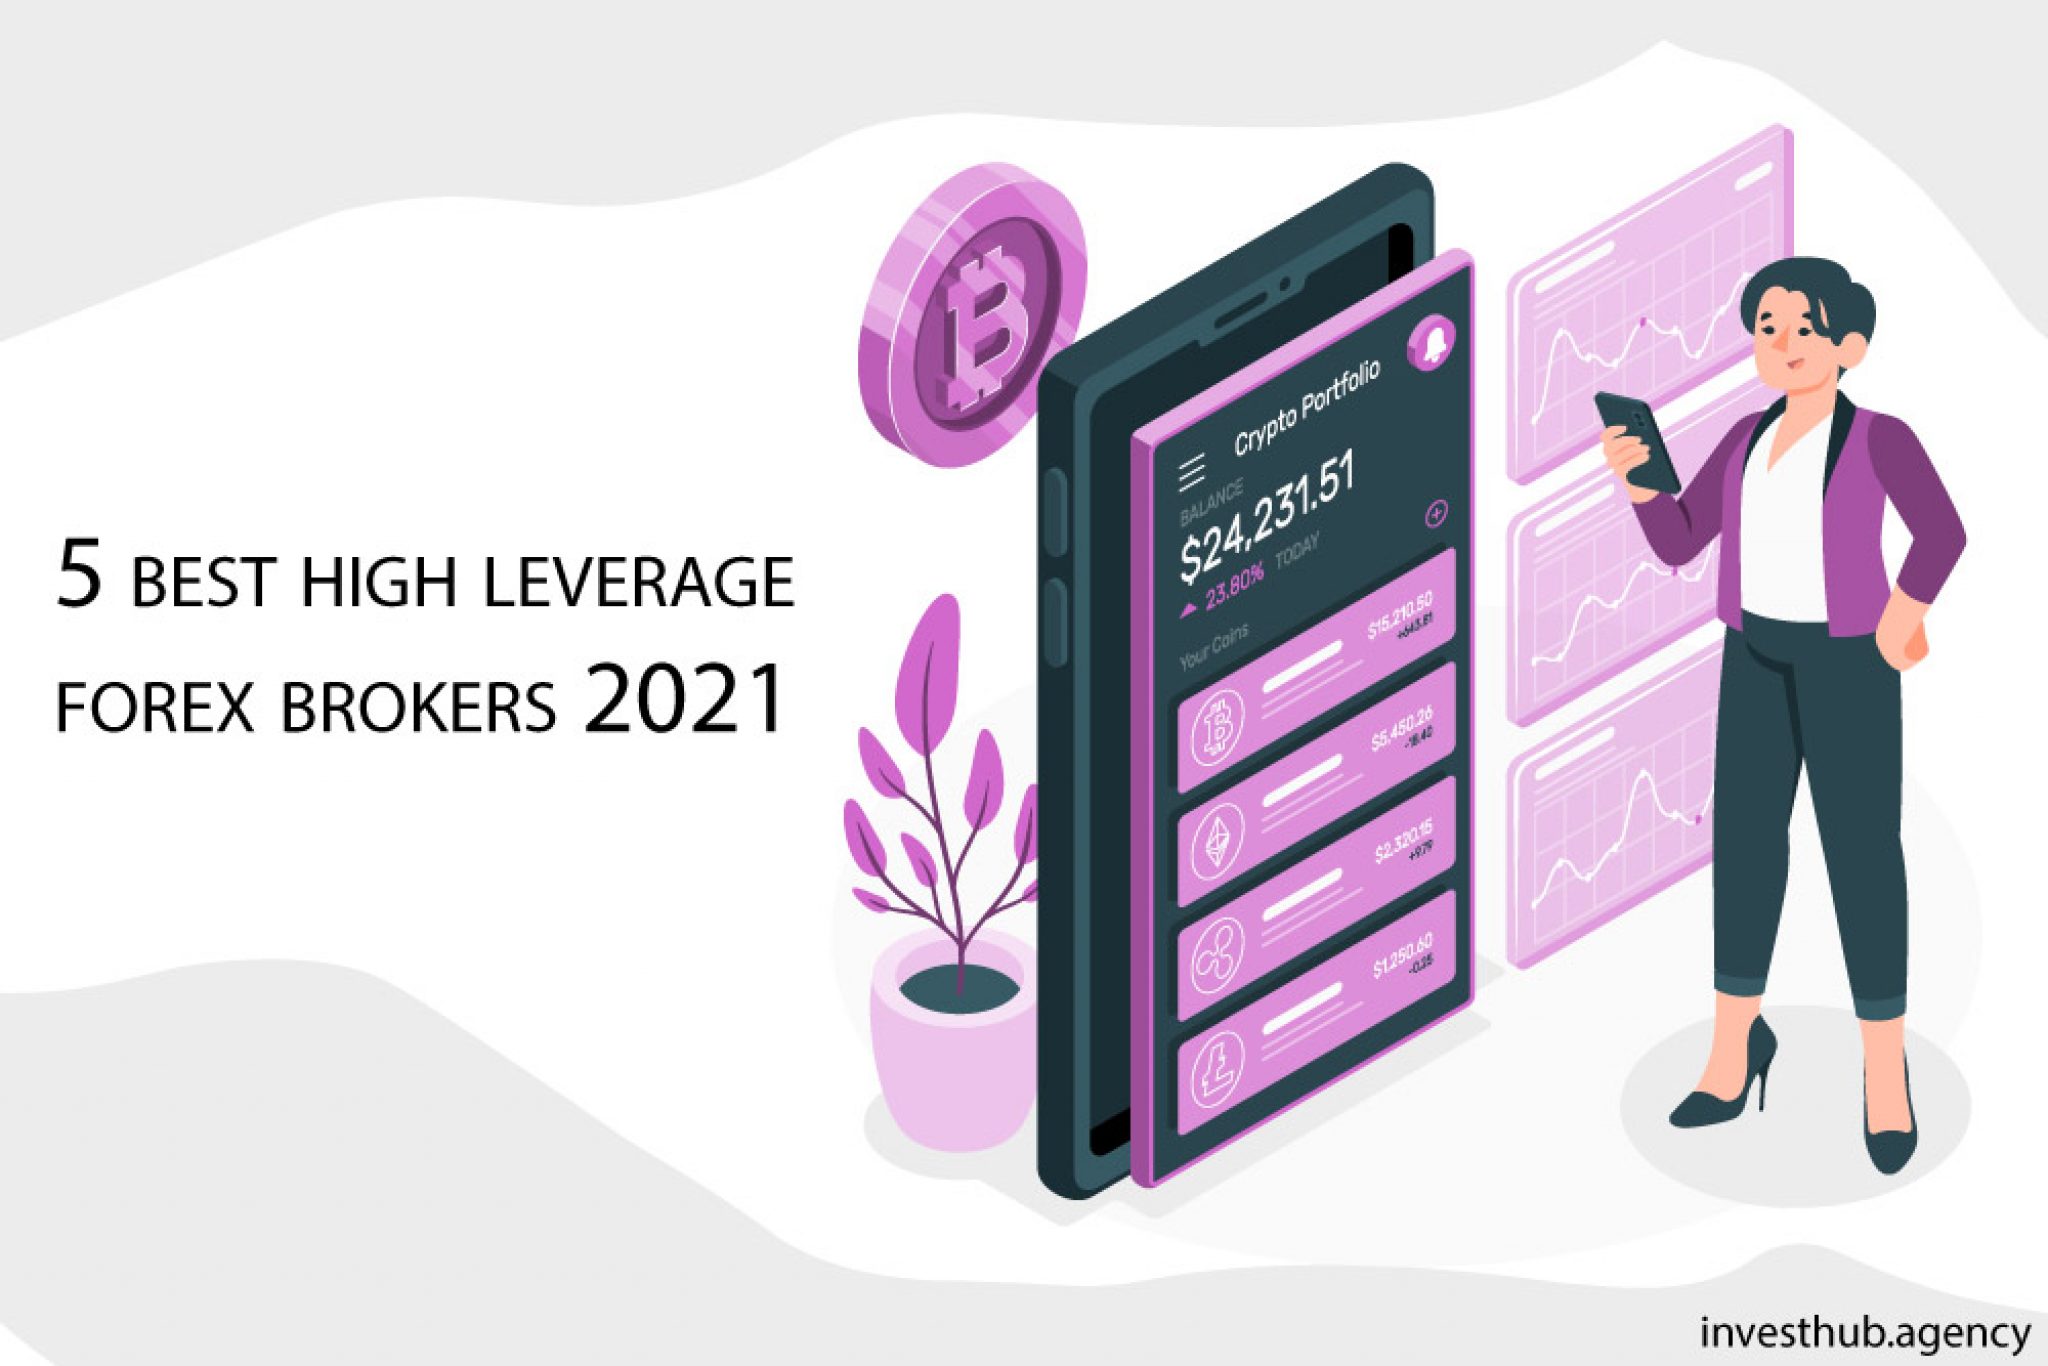 5 Best High Leverage Forex Brokers 2021 - Forex Broker Reviews